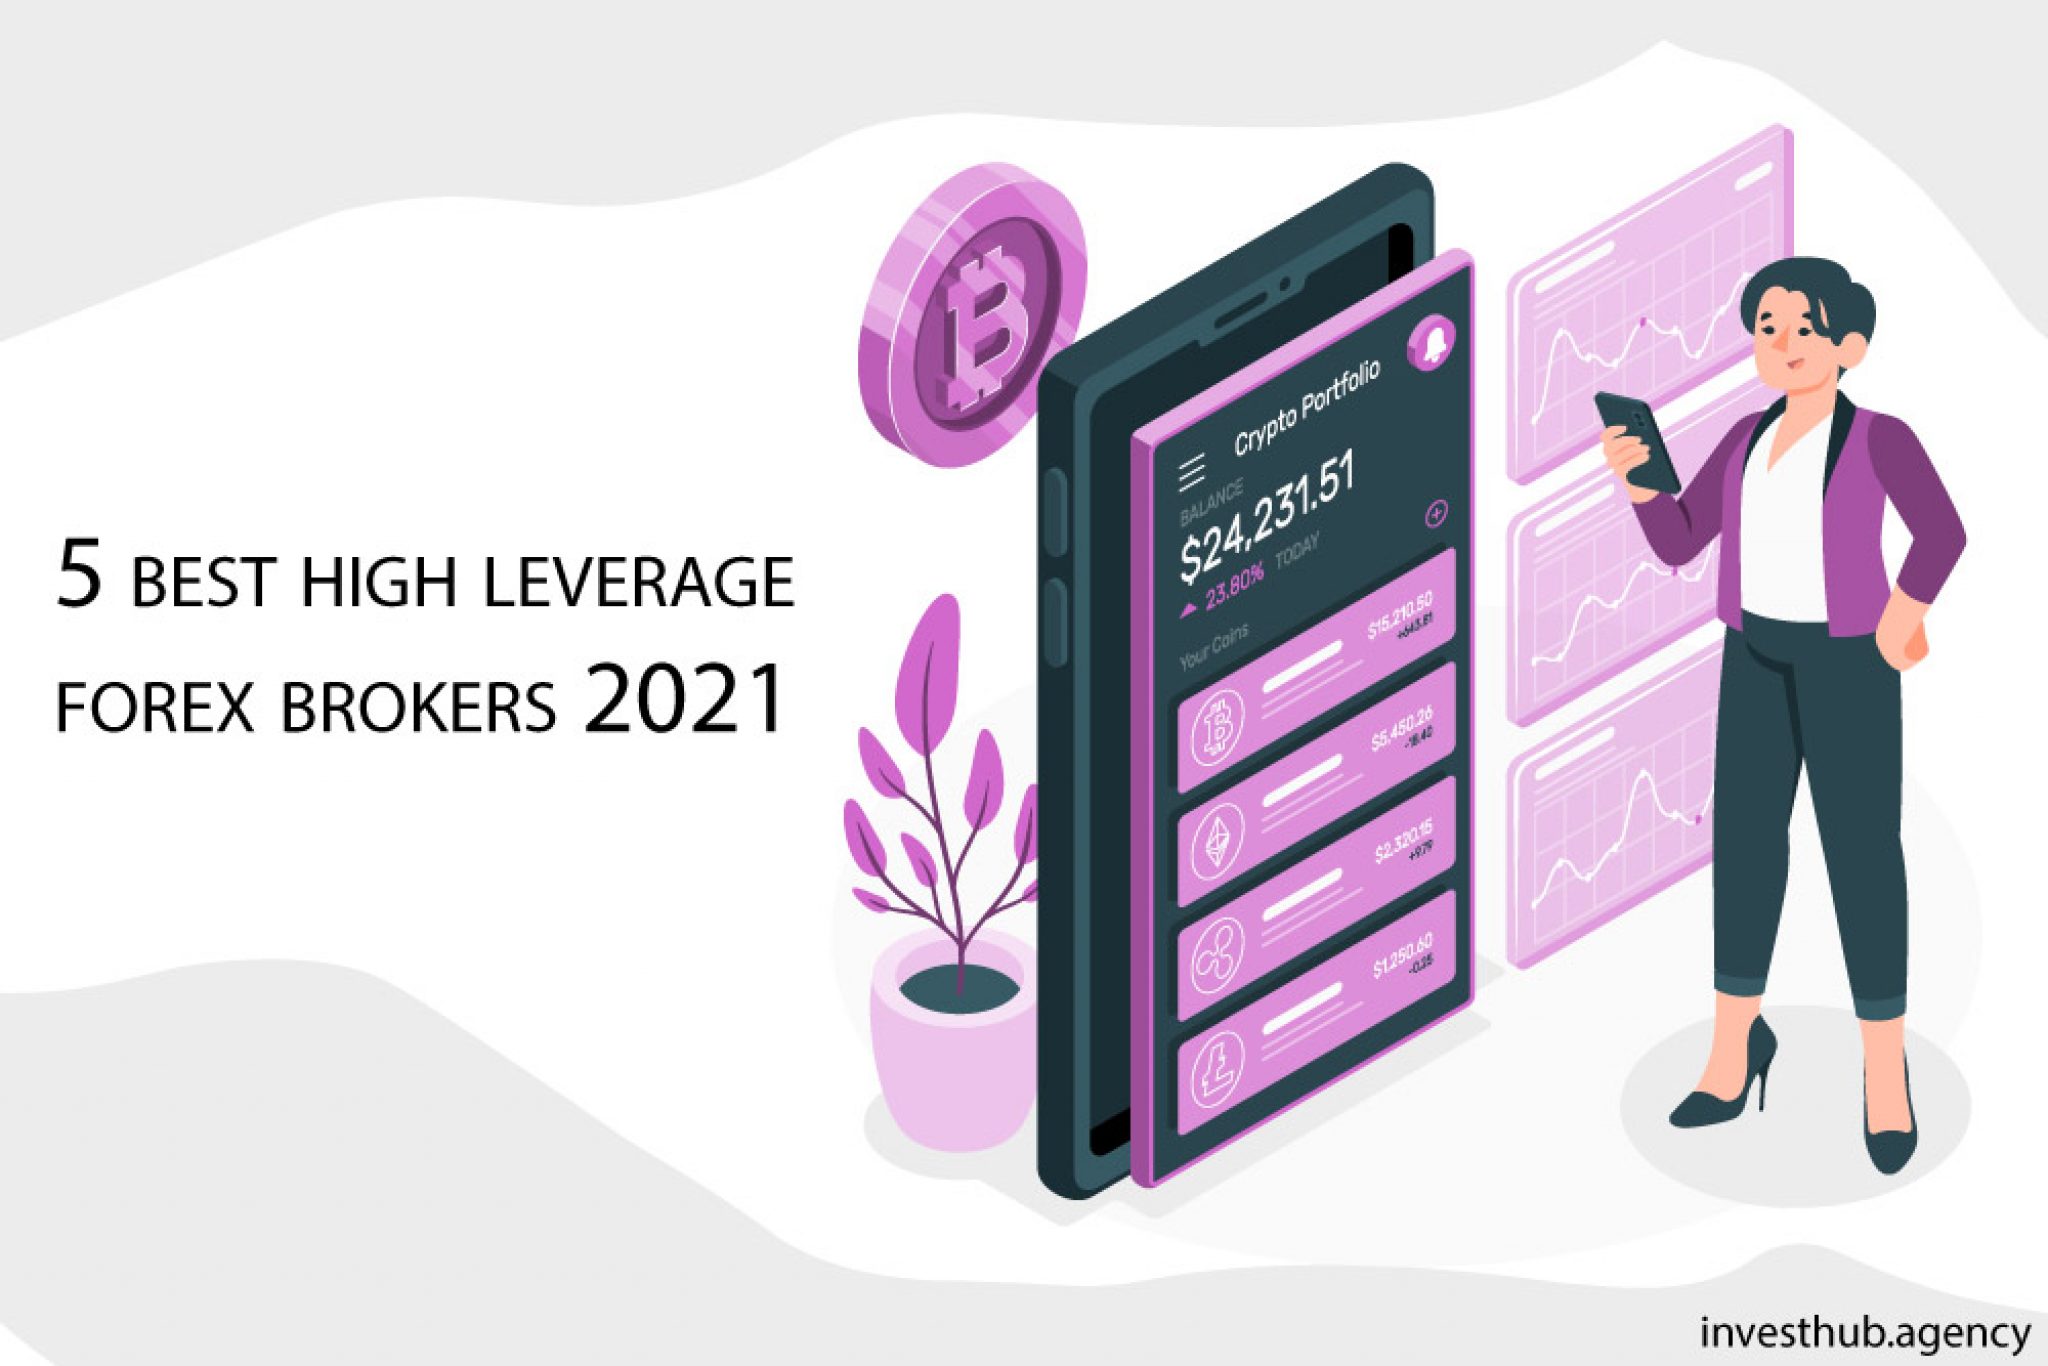 5 Best High Leverage Forex Brokers 2021 - Forex Broker Reviews